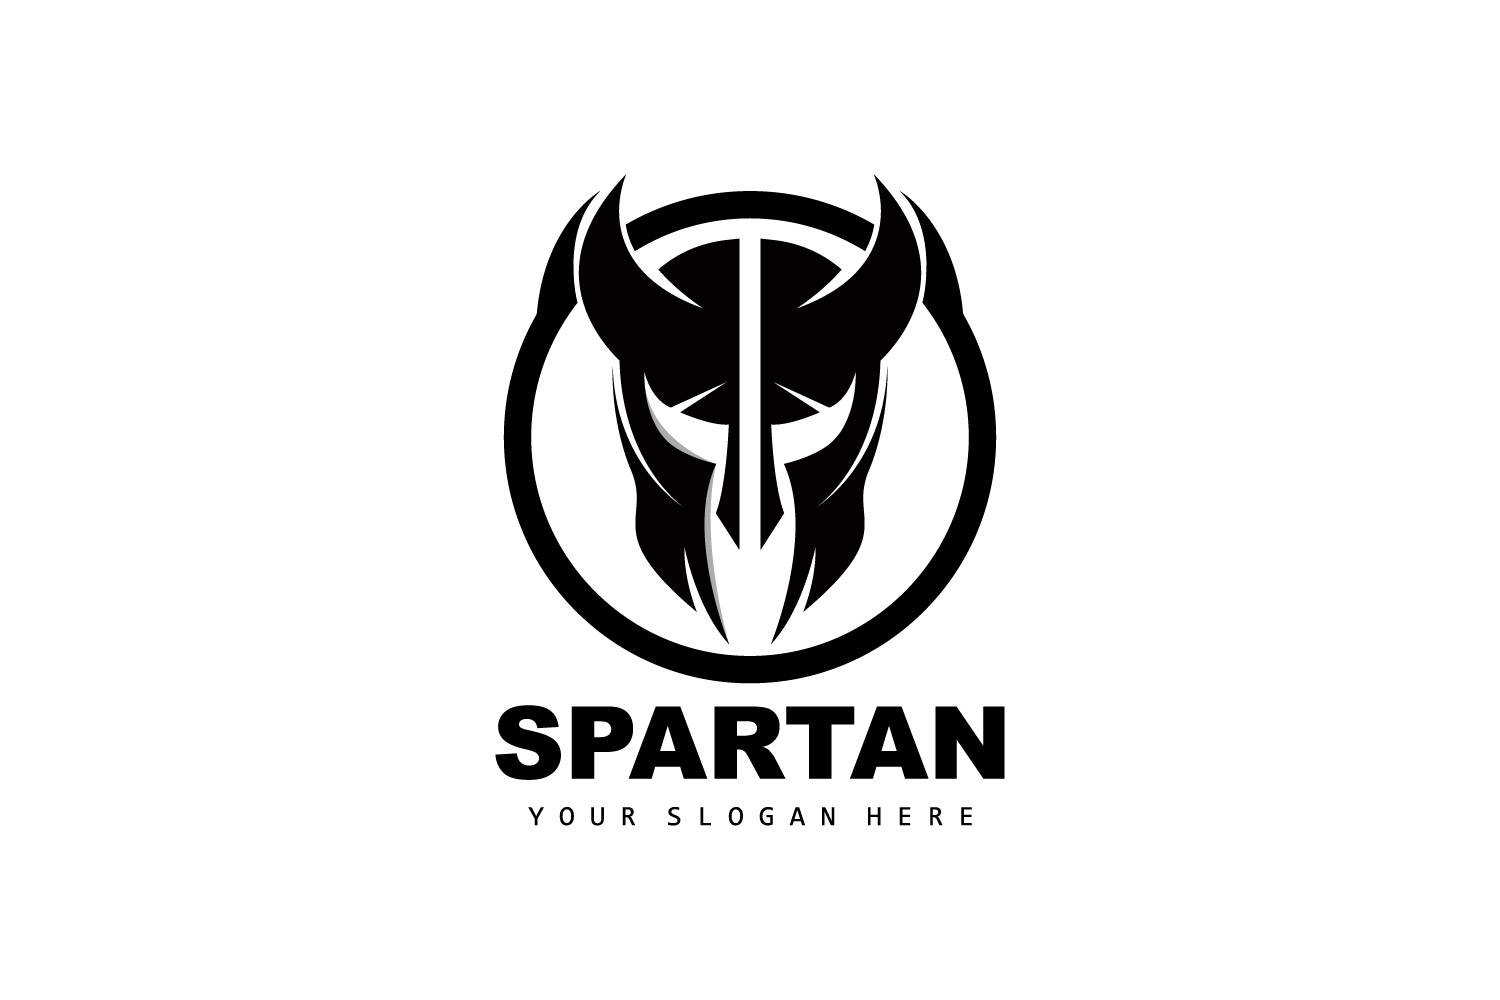 Spartan Logo Vector Silhouette Knight DesignV15